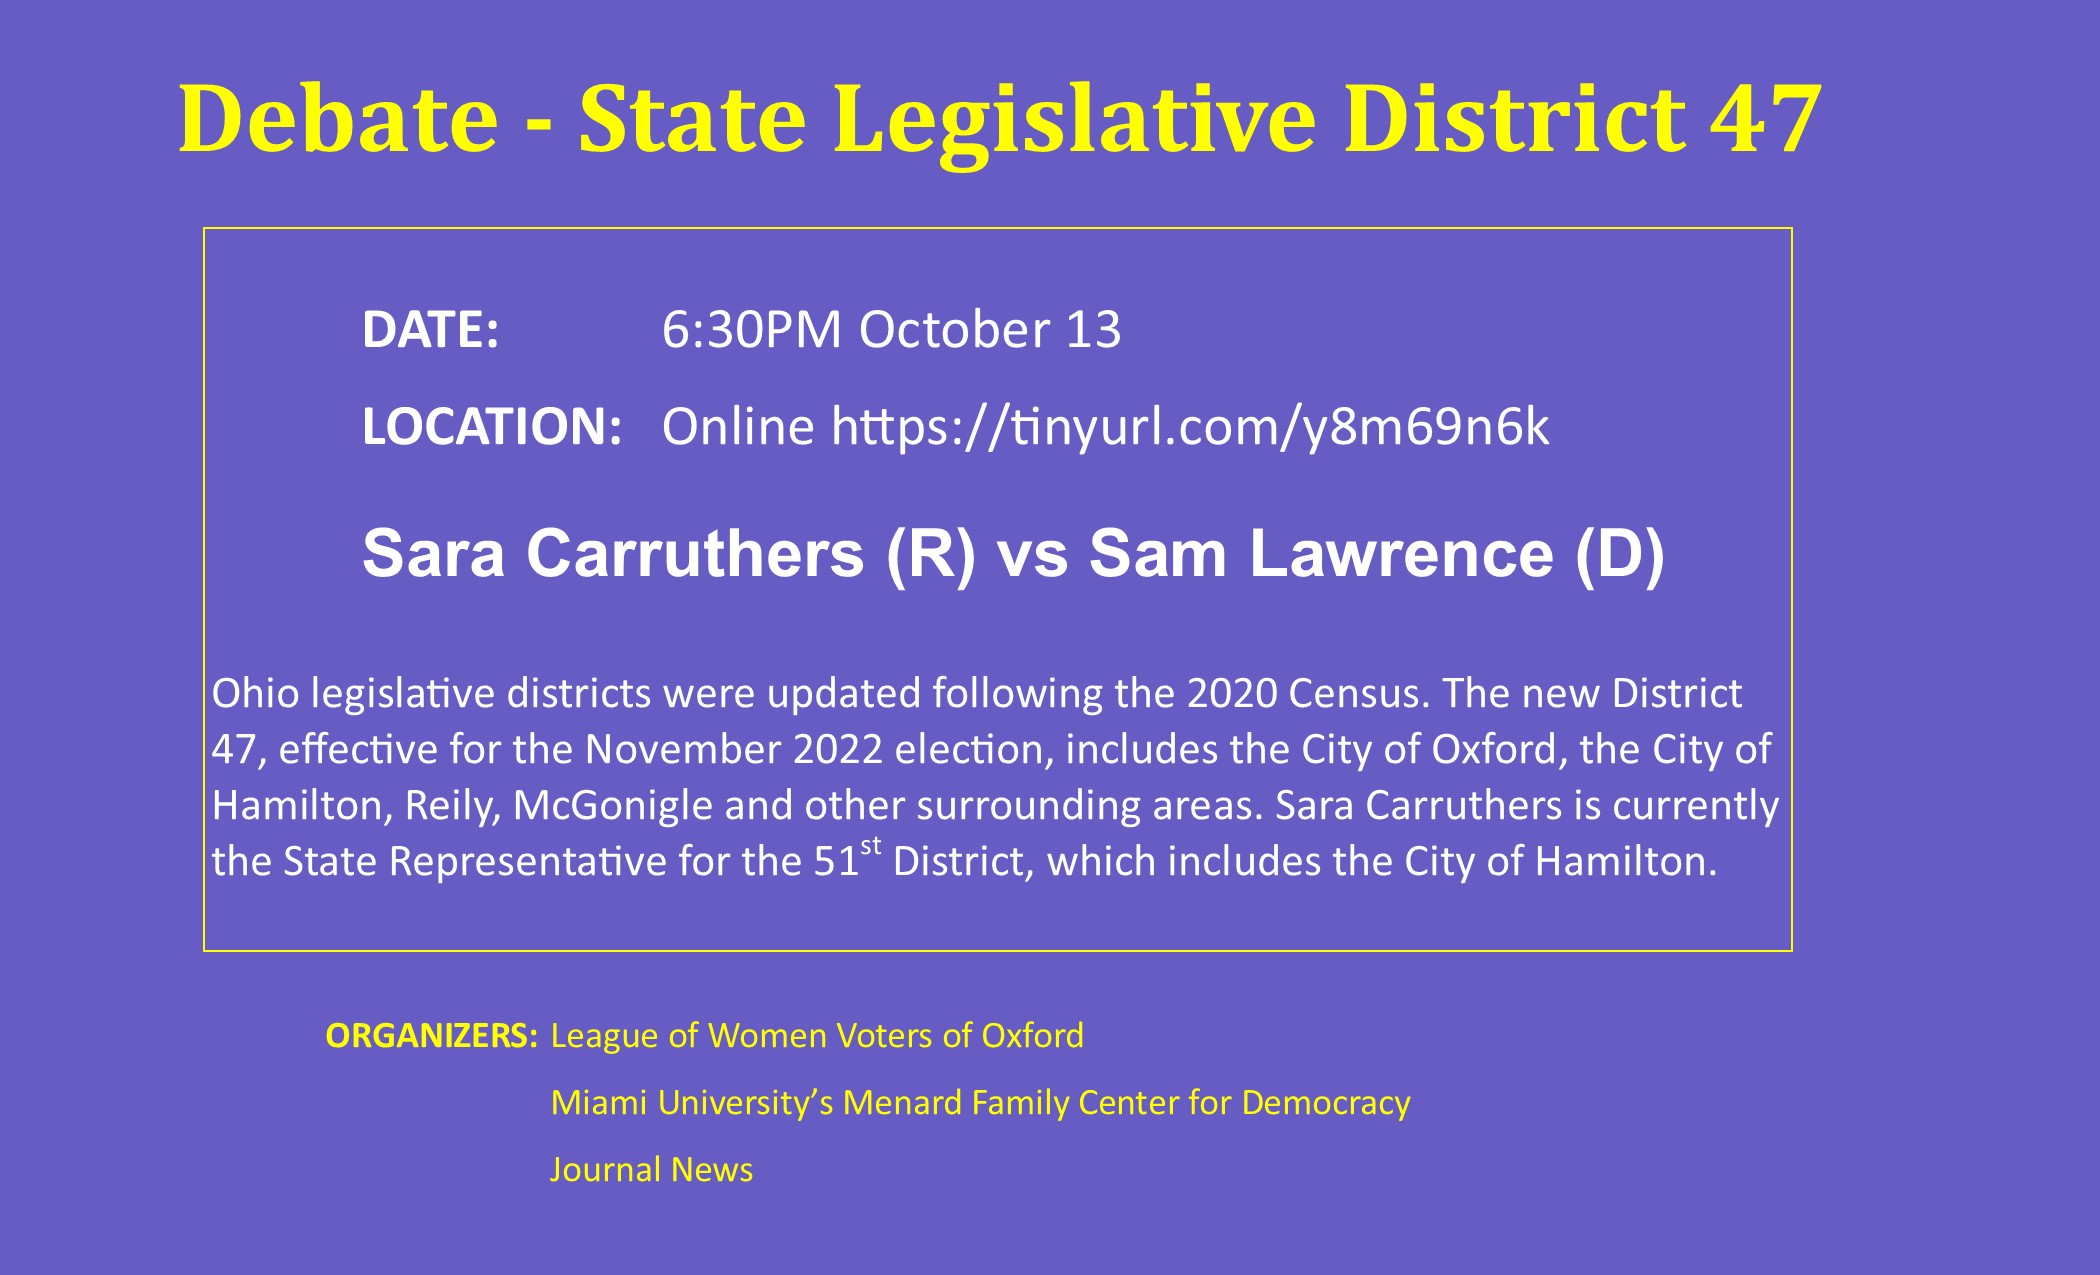 Graphic of details of State Legislative District 47 Debate